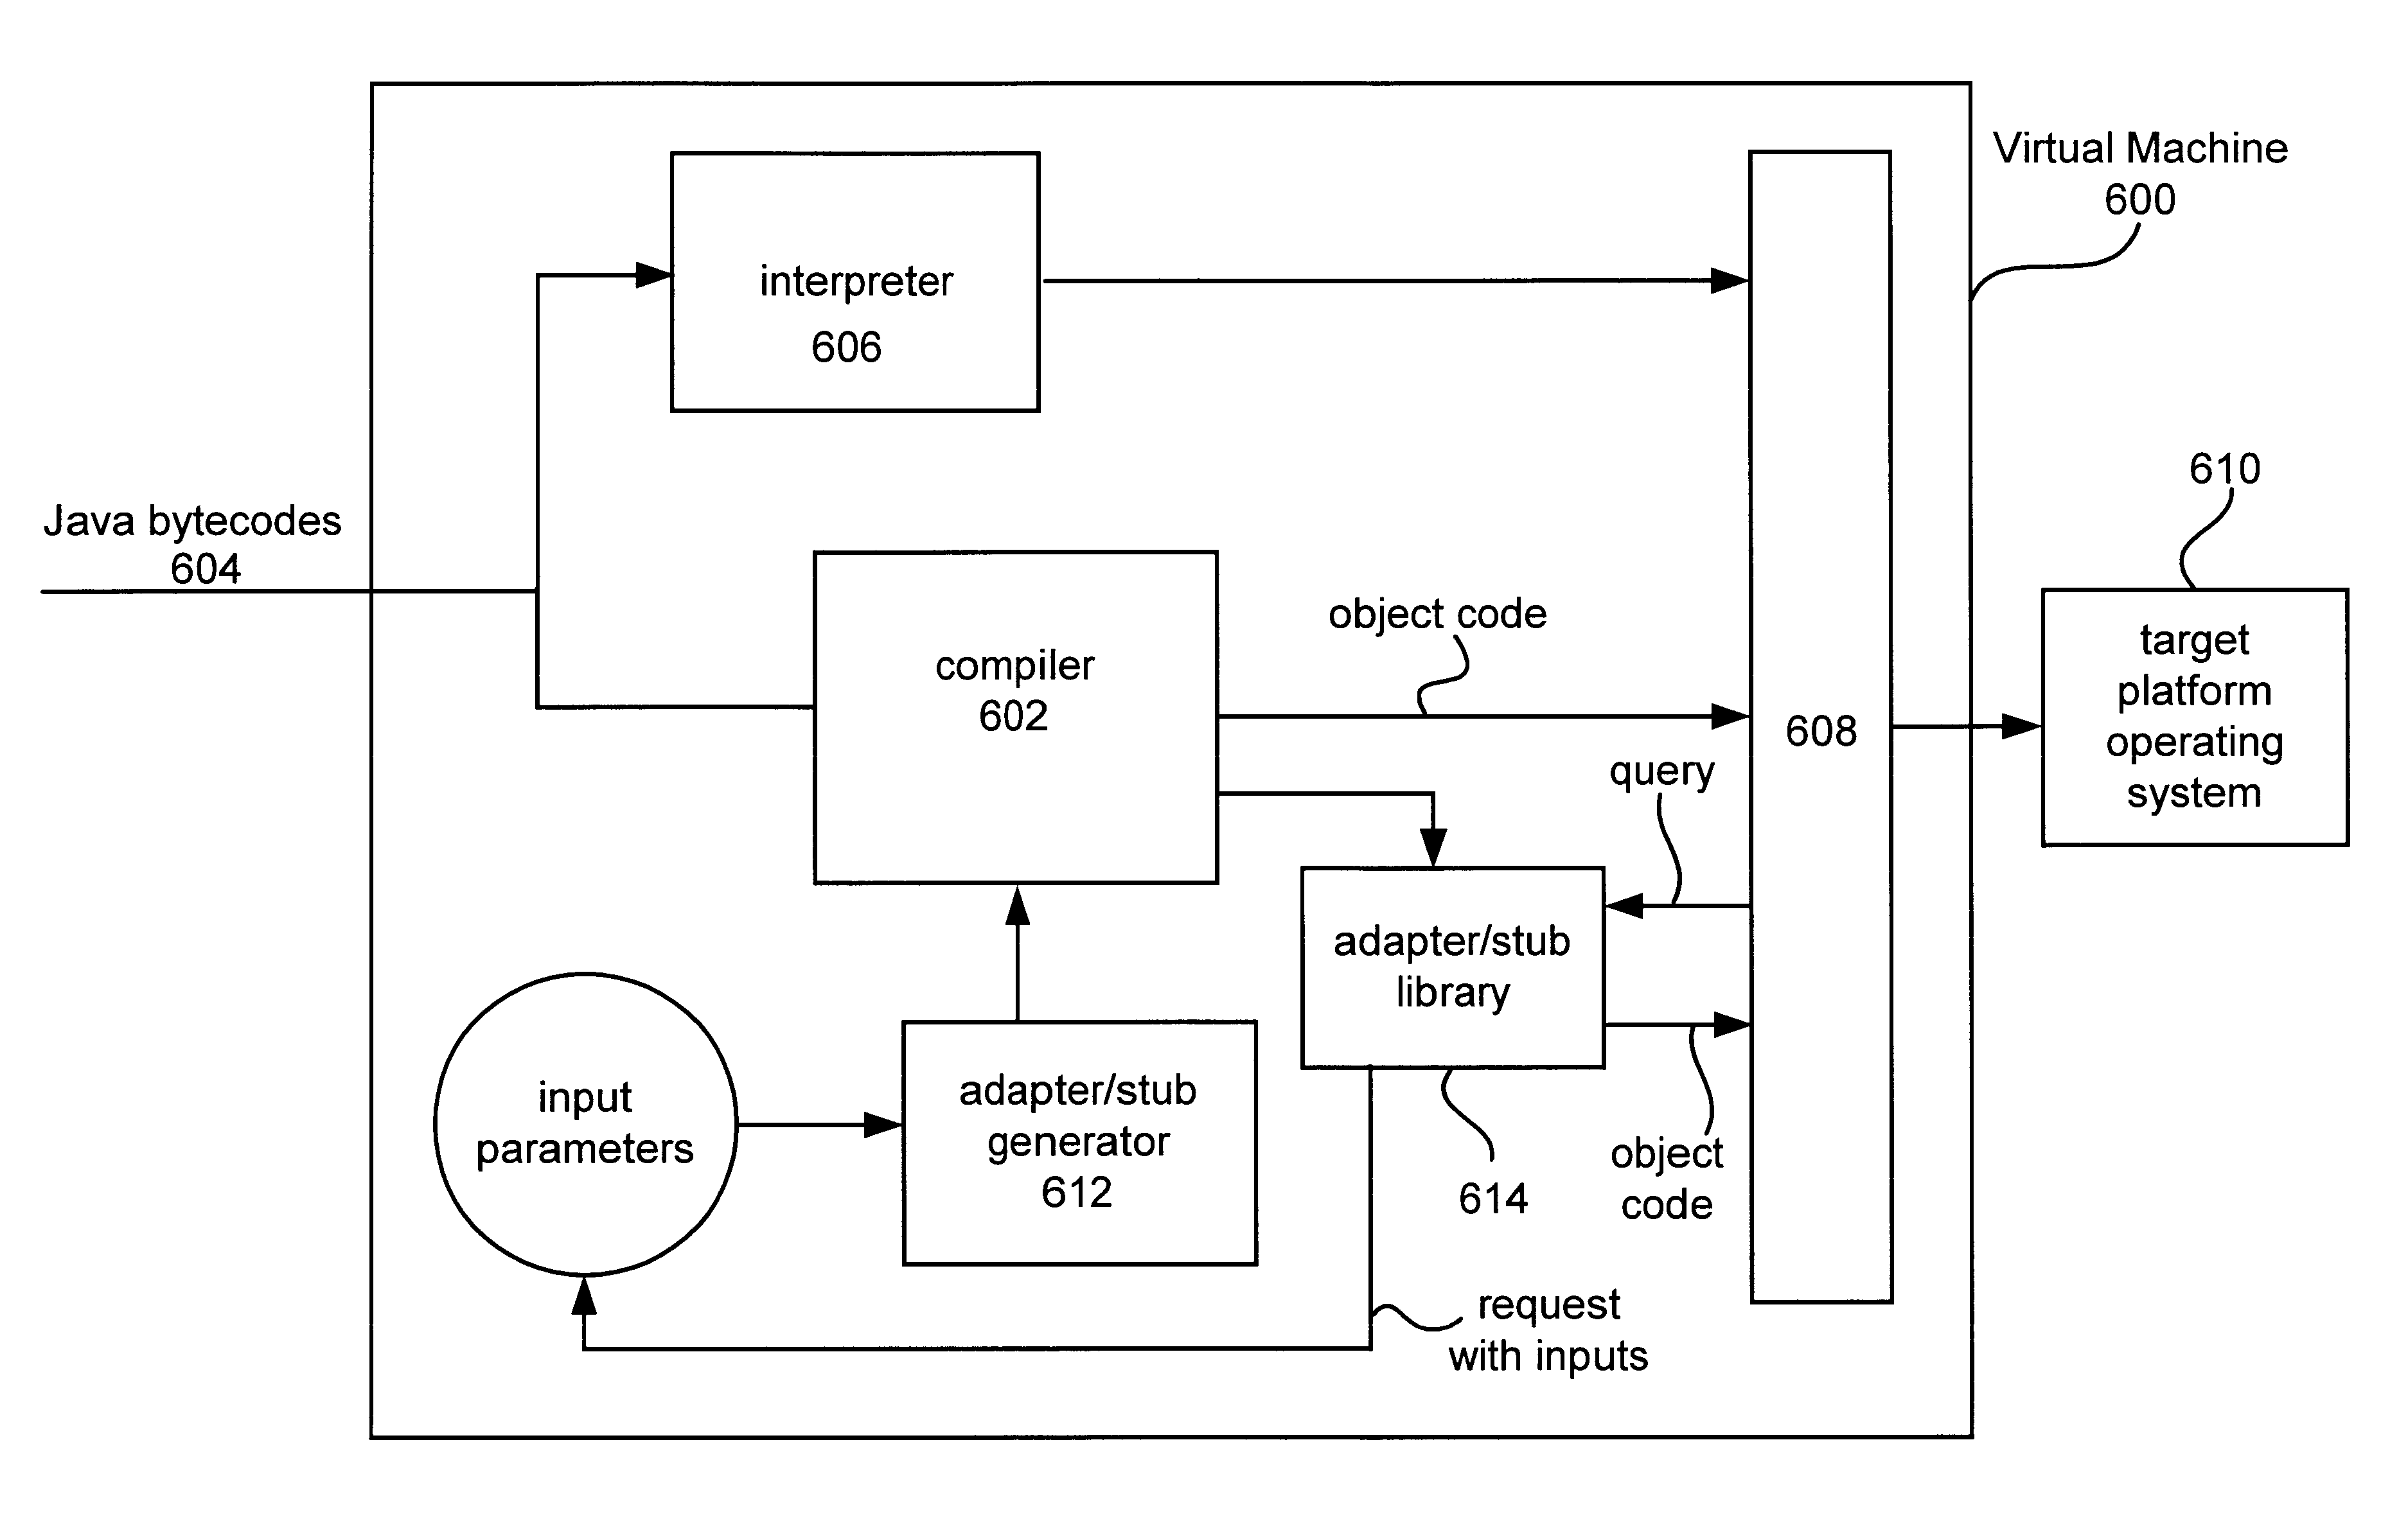 Automatic adapter/stub generator